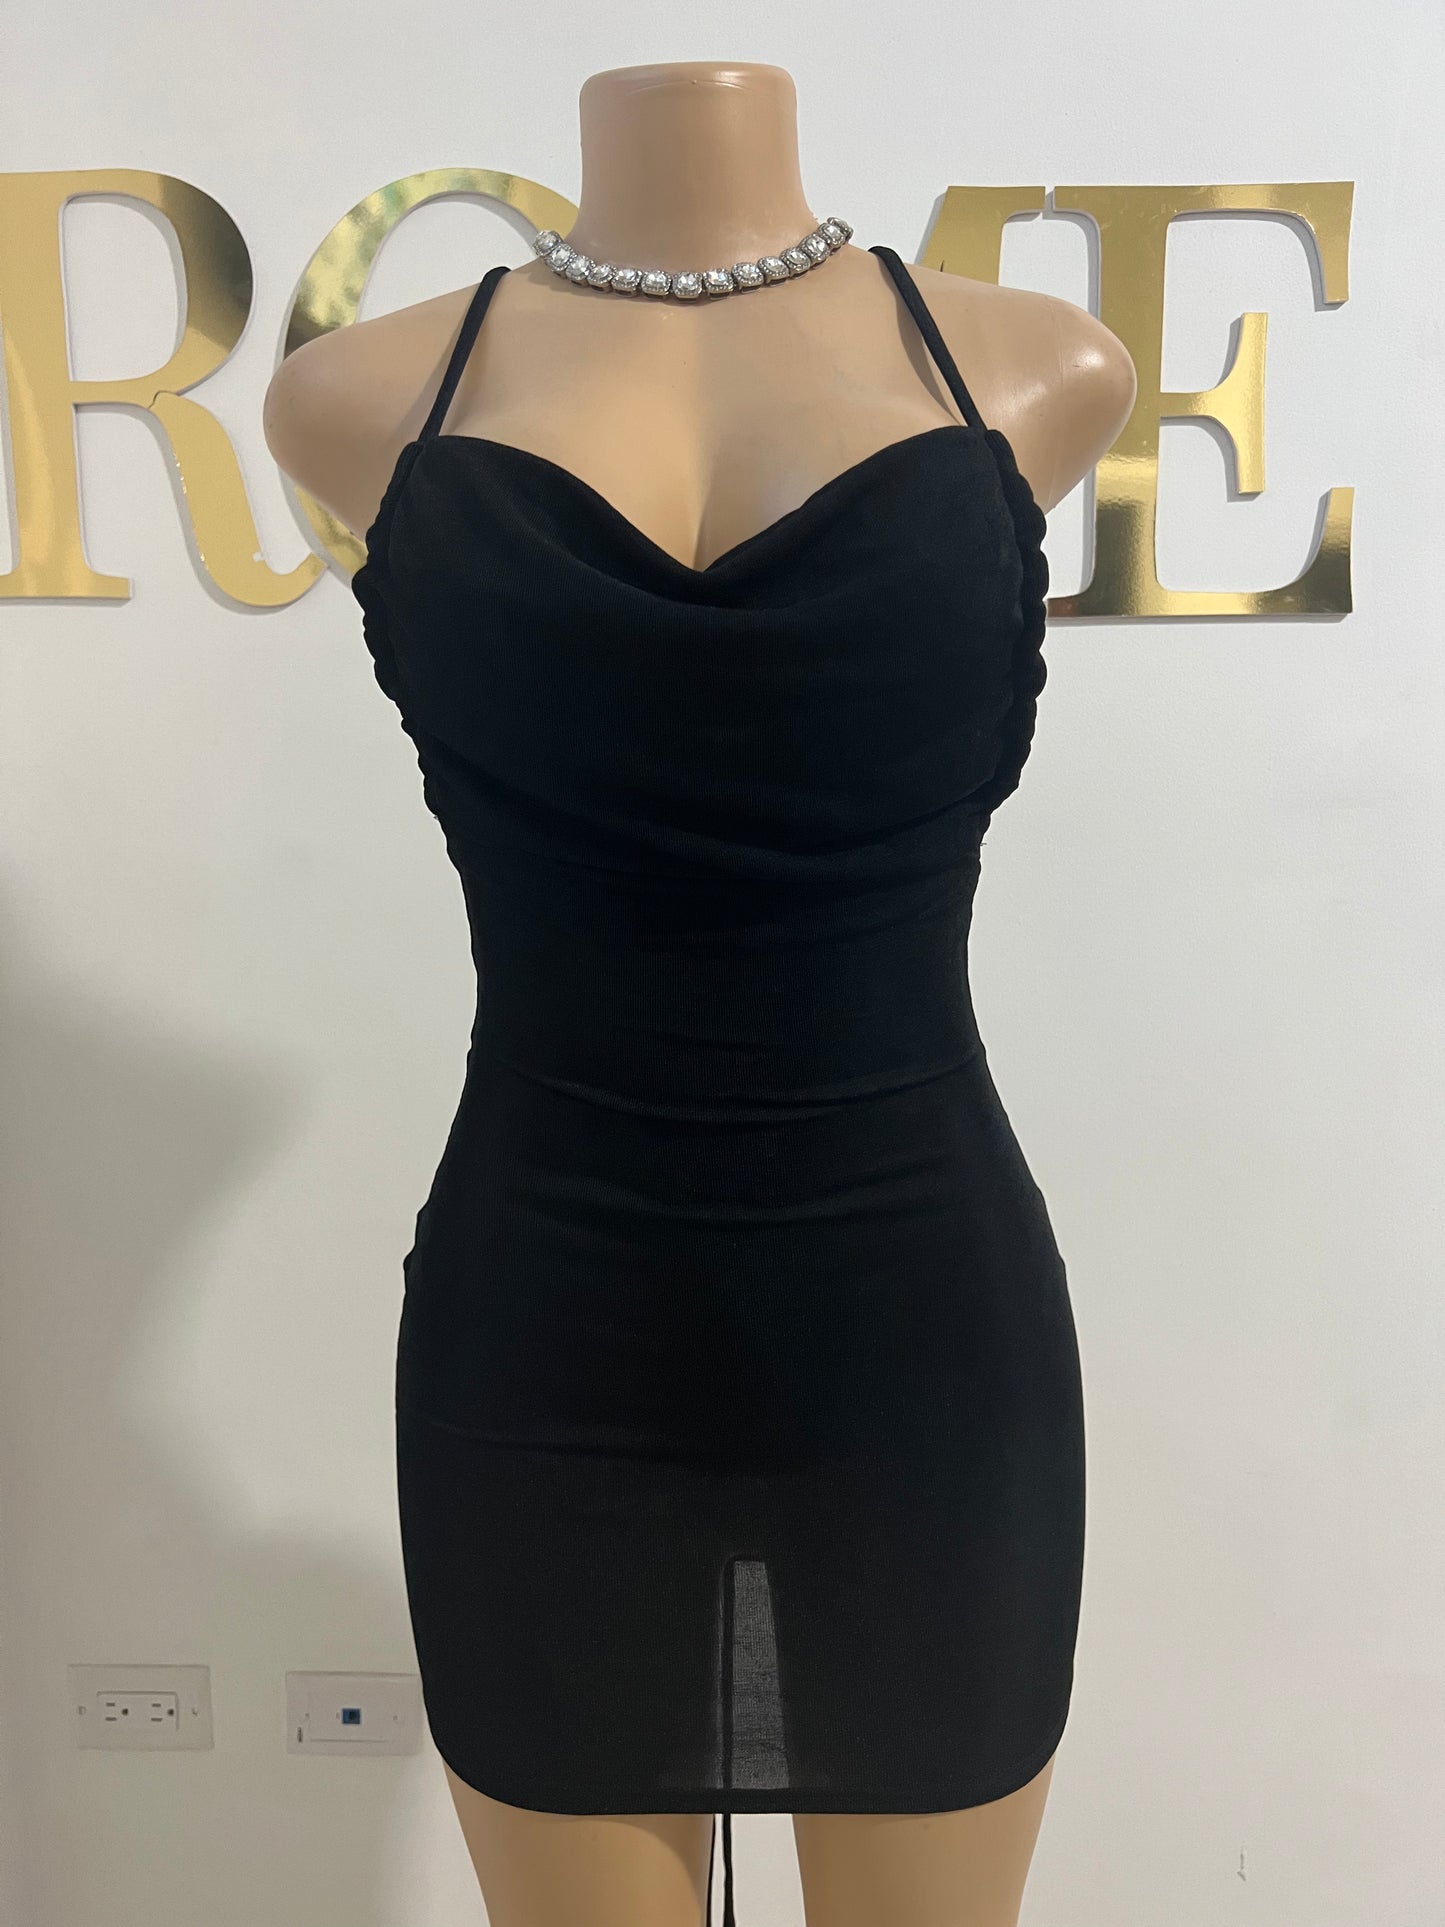 Carey Rouched Mini Dress (Black)